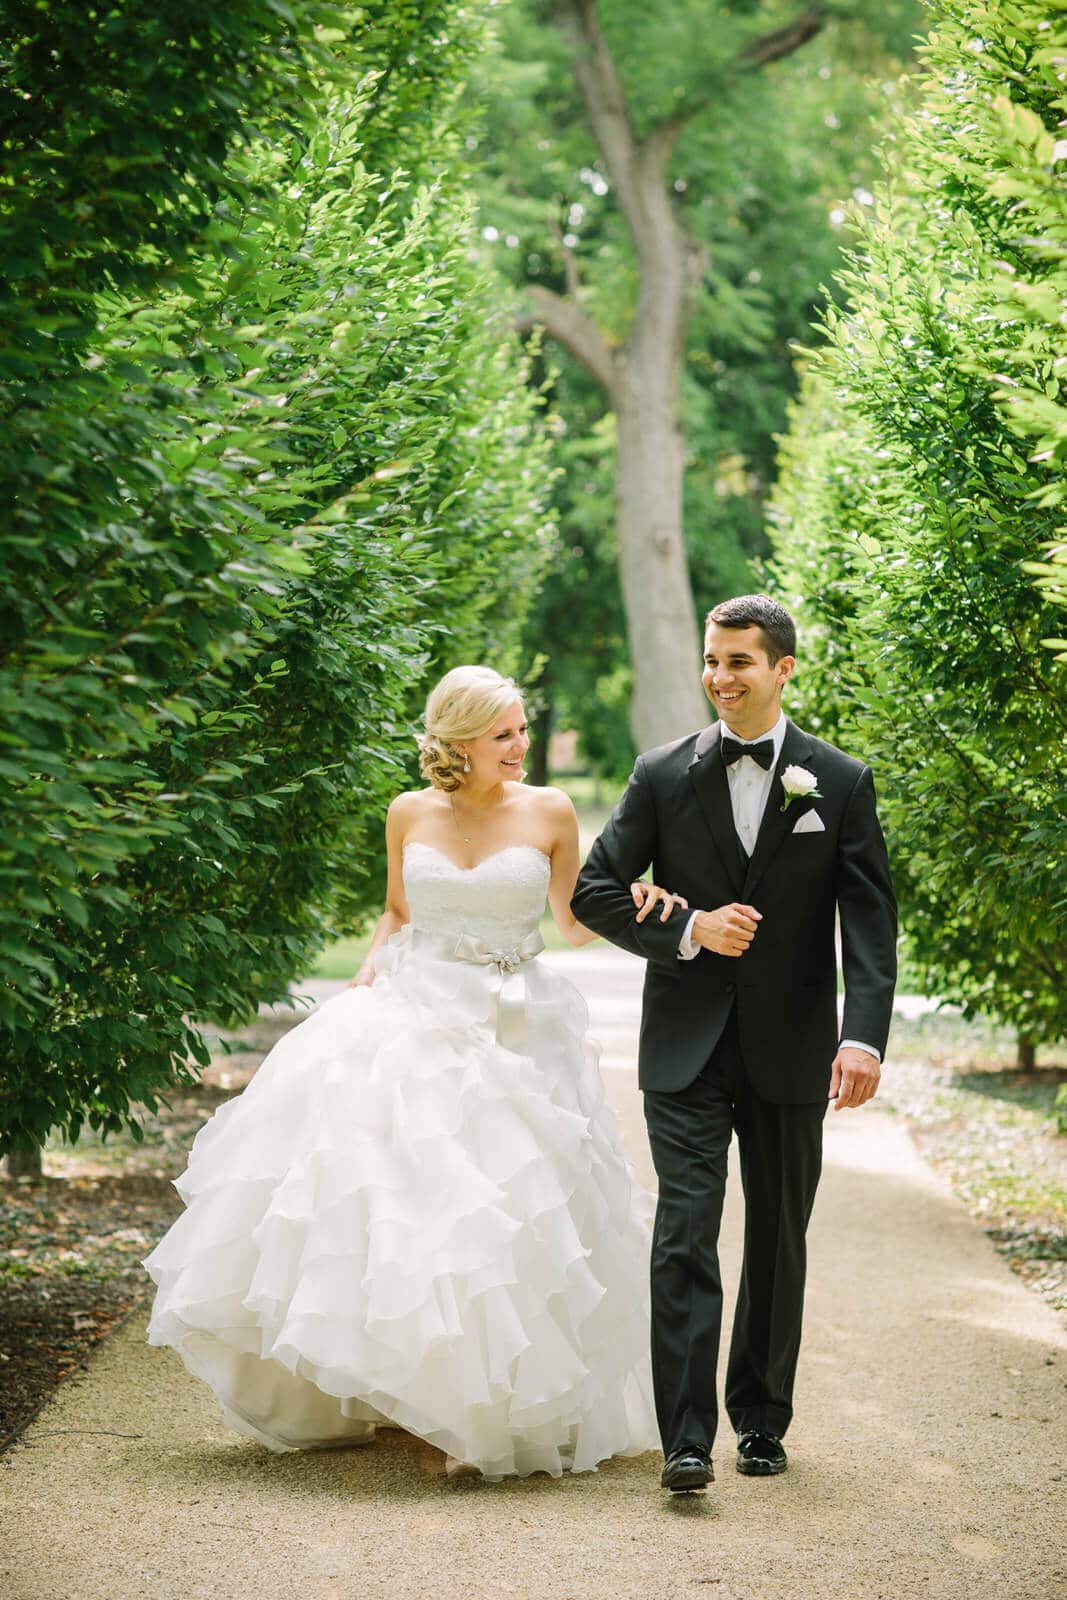 Adam Lowe Photography, wedding, Columbus, Ohio, Franklin park conservatory, bridesmaids, outdoor wedding, colorful wedding, bride and groom, wedding dress, tux